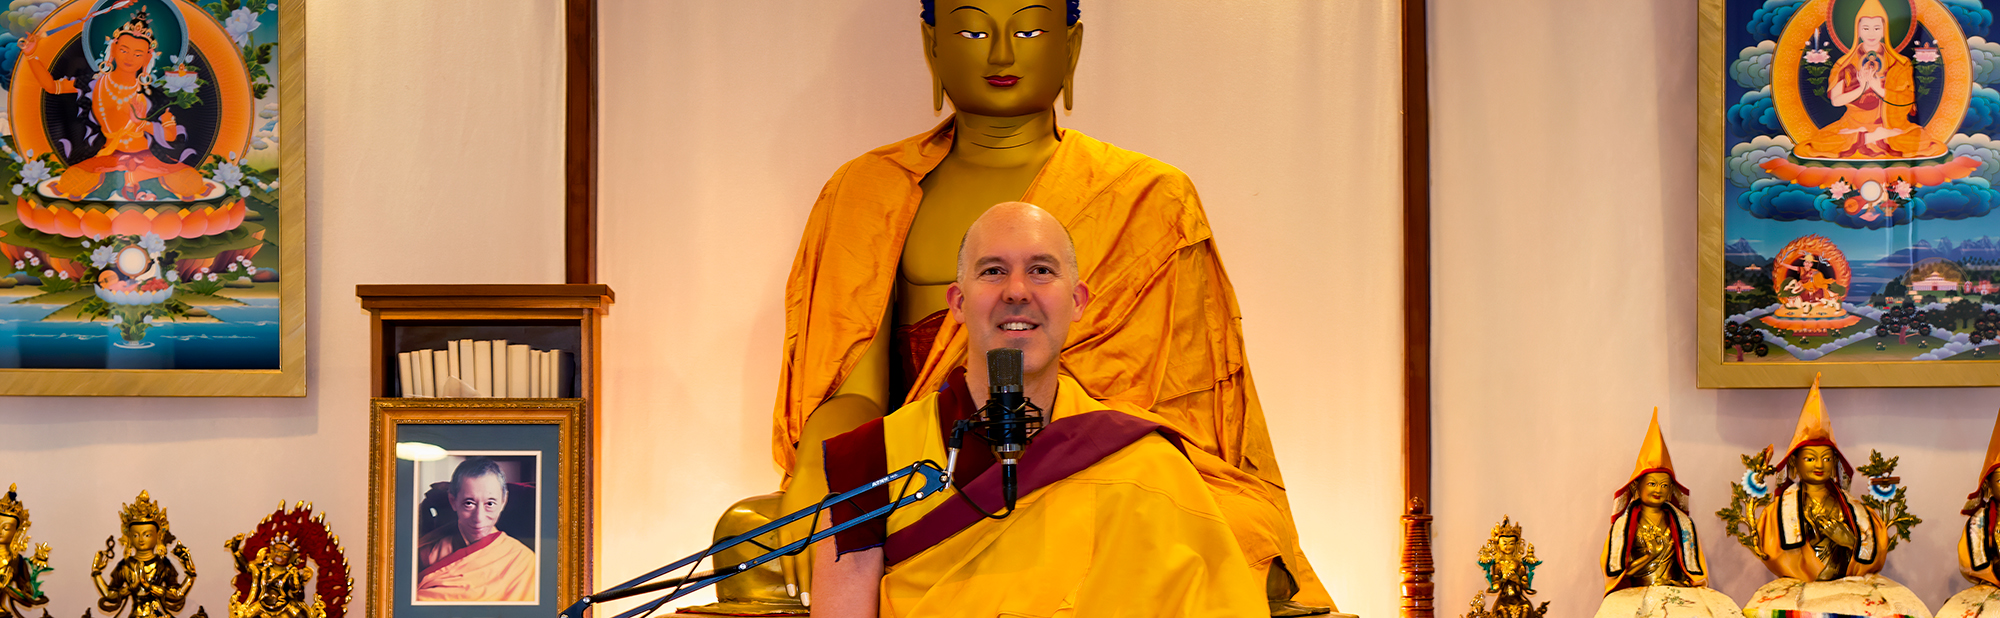 meditation and modern Buddhism Gen Rinzin on the throne